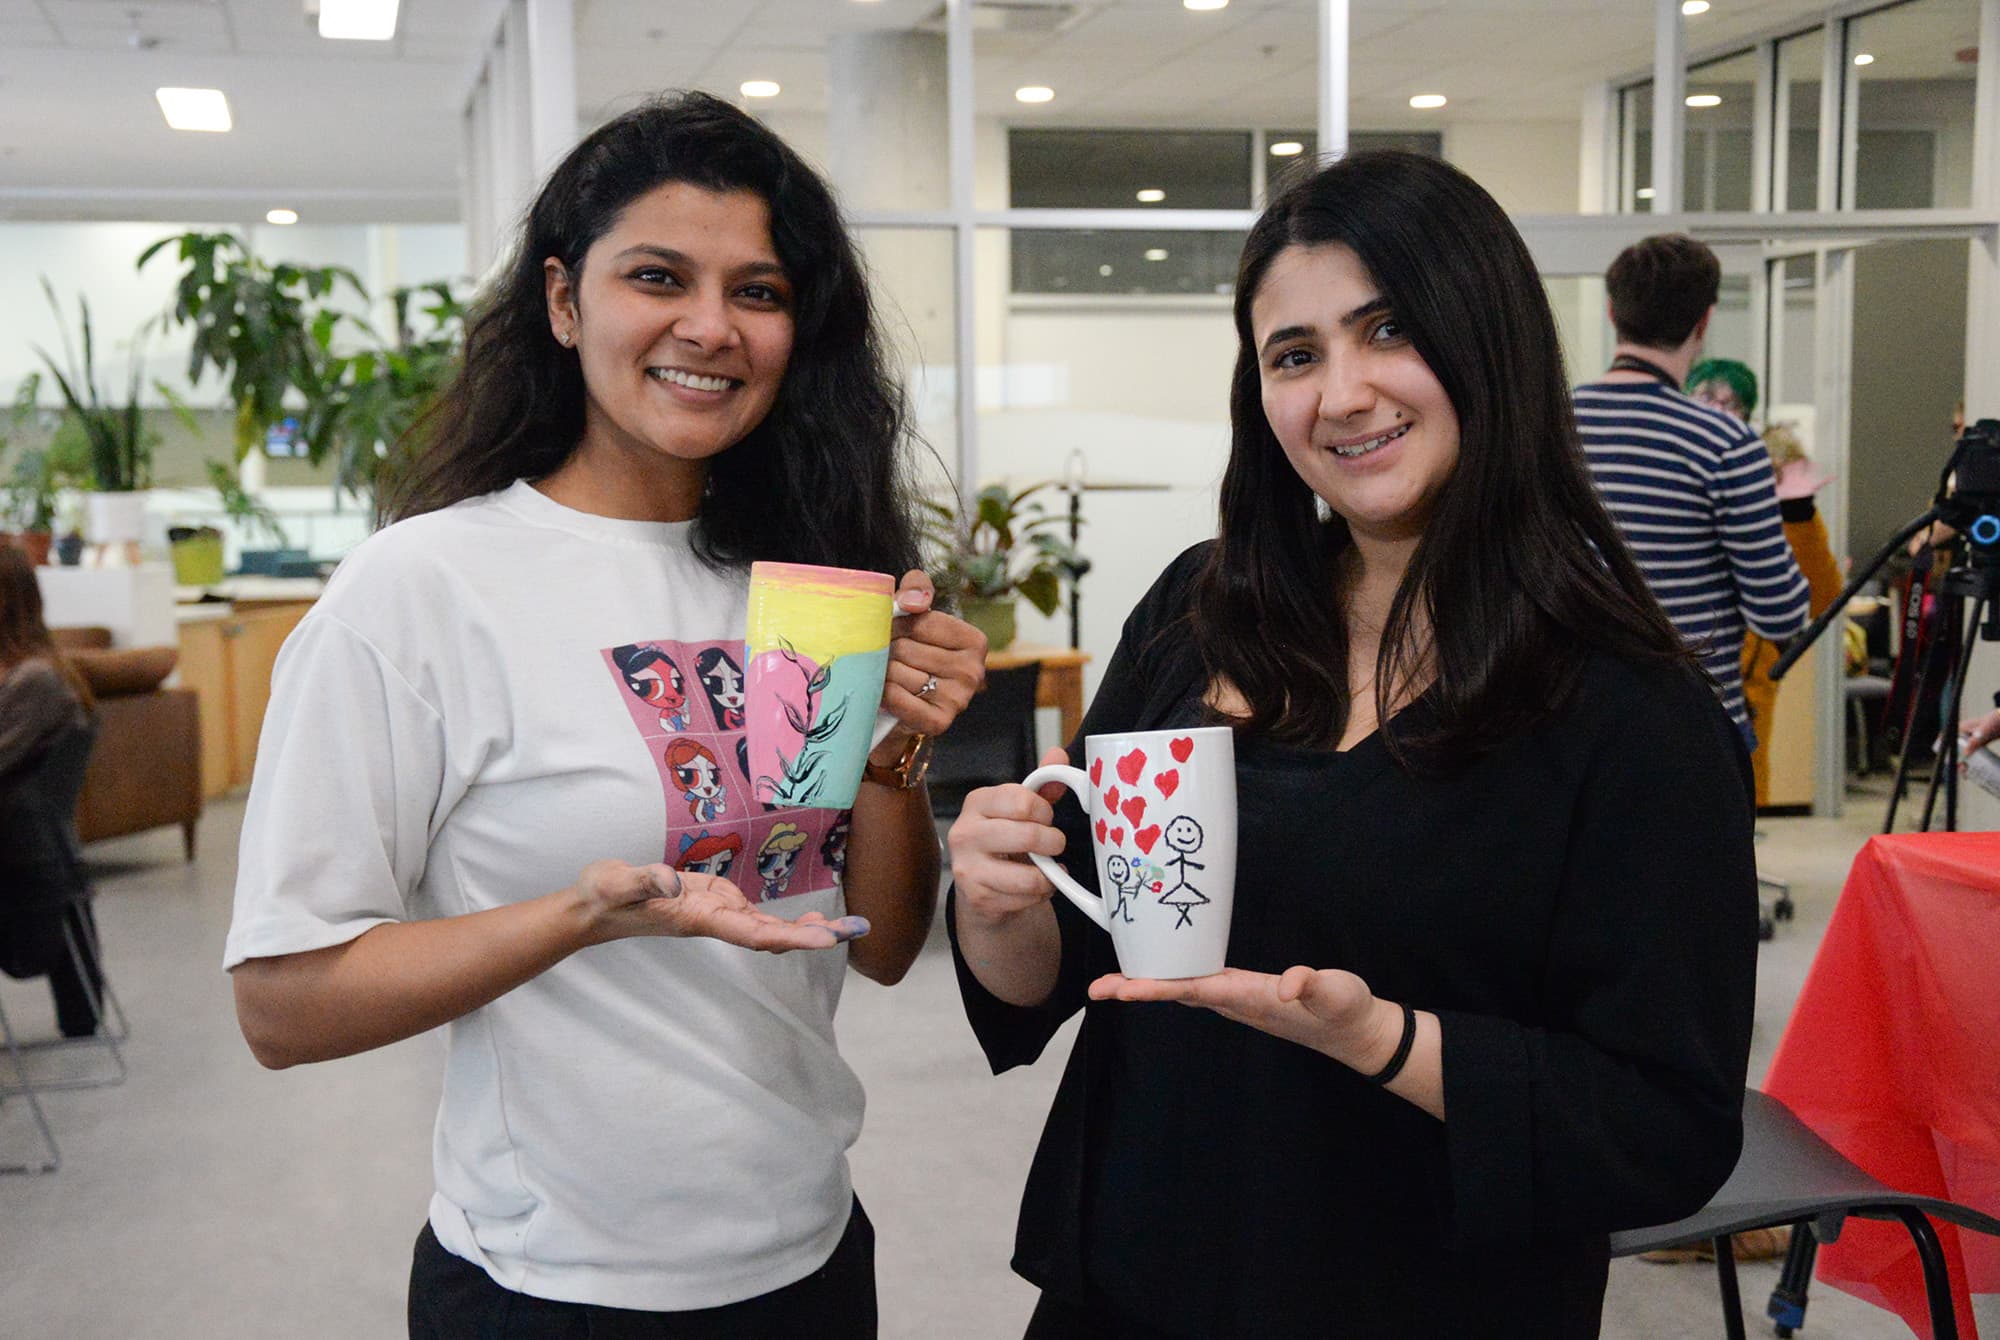 Gizem Akgul and Pragya Parmar show off their painted mugs.